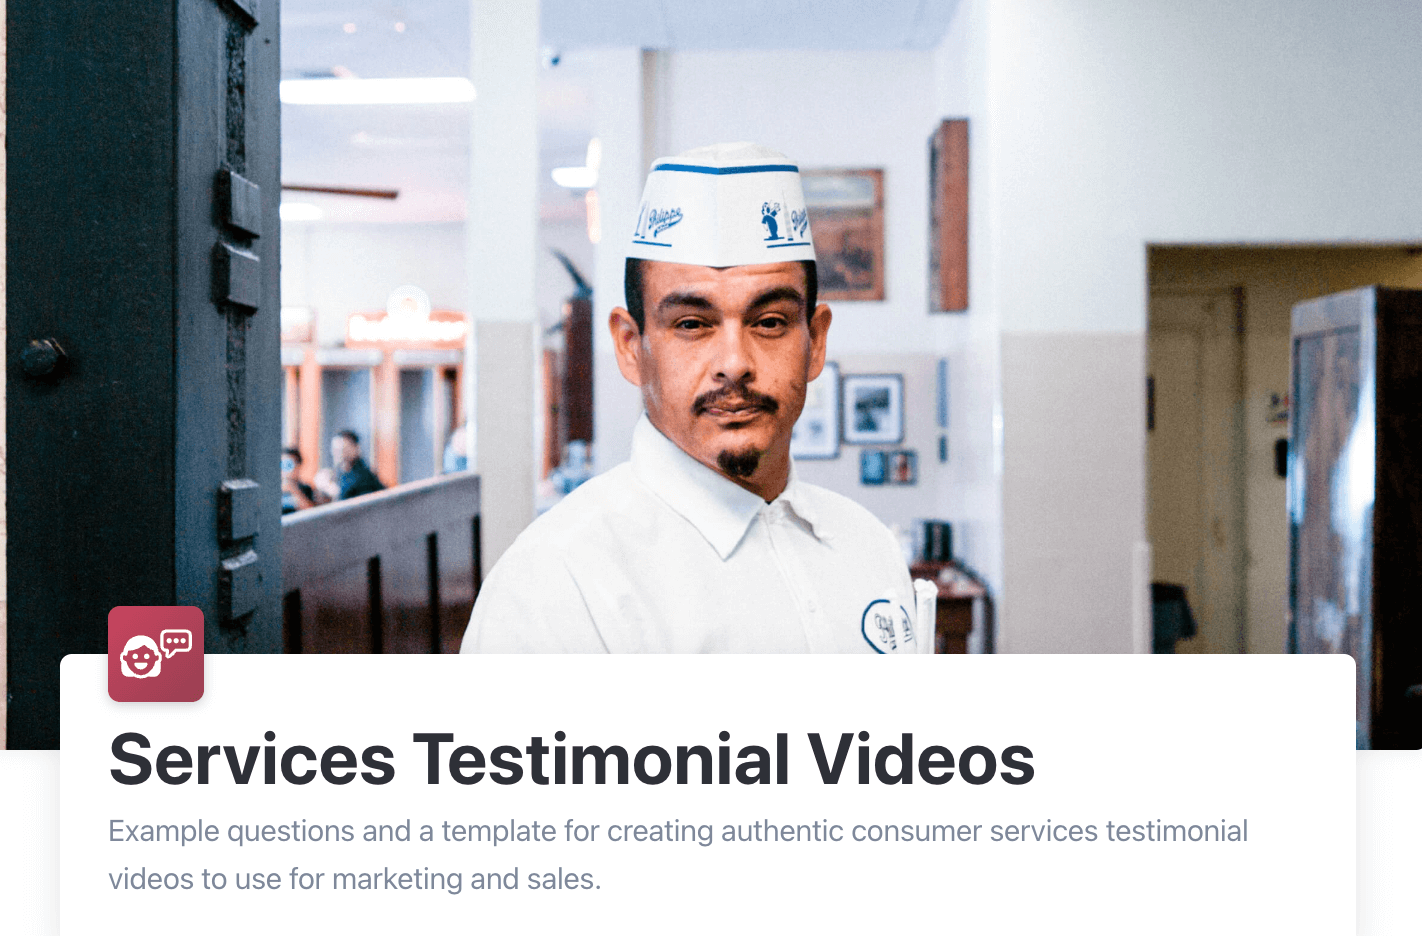 Services testimonial videos